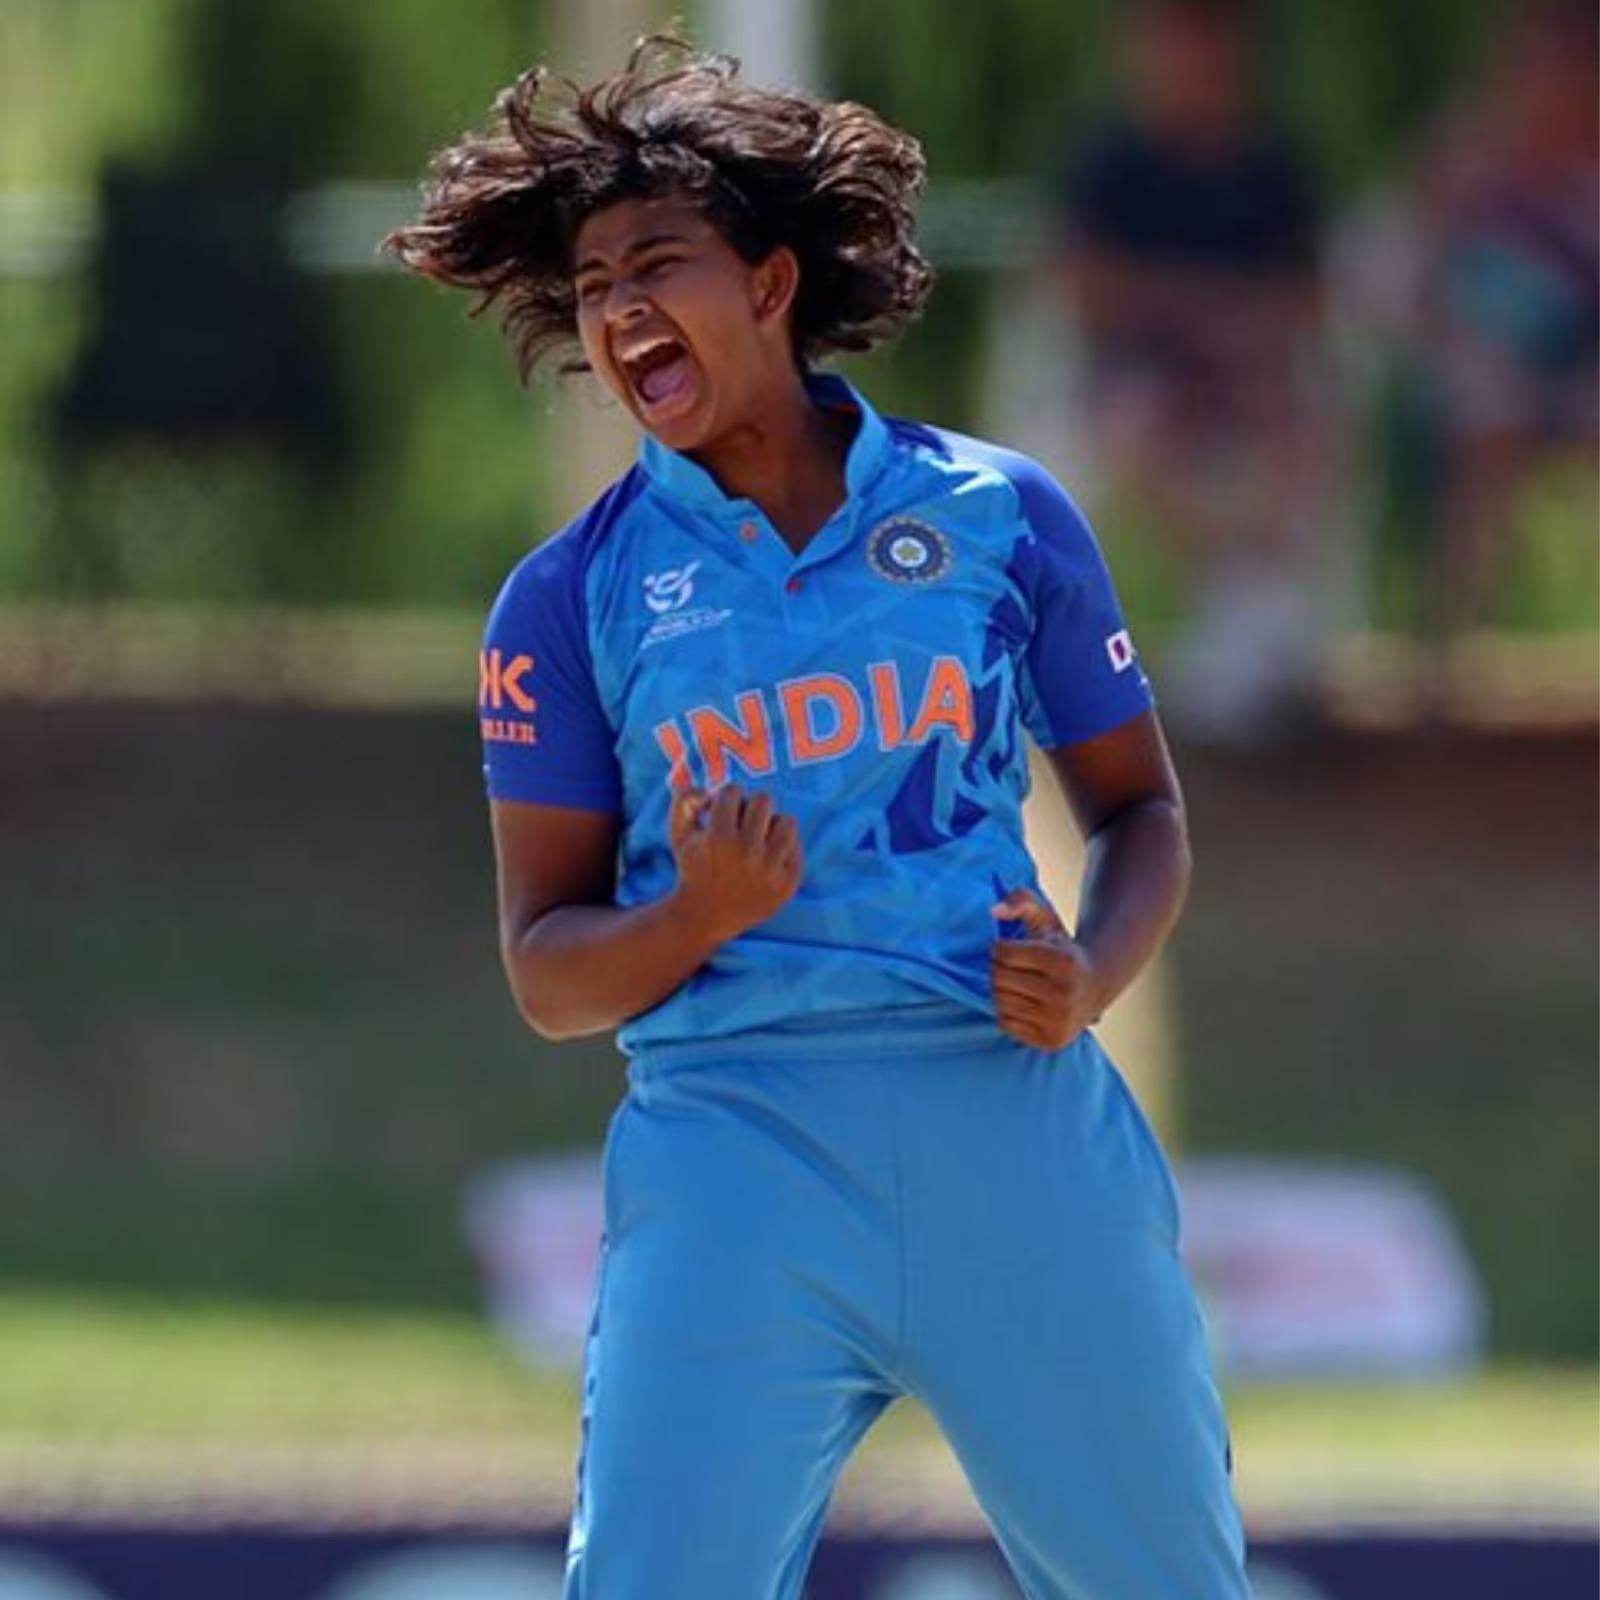 #Women’sDaySpecial: Know The T20 World Cup Winning U19 Indian Women’s Cricket Team